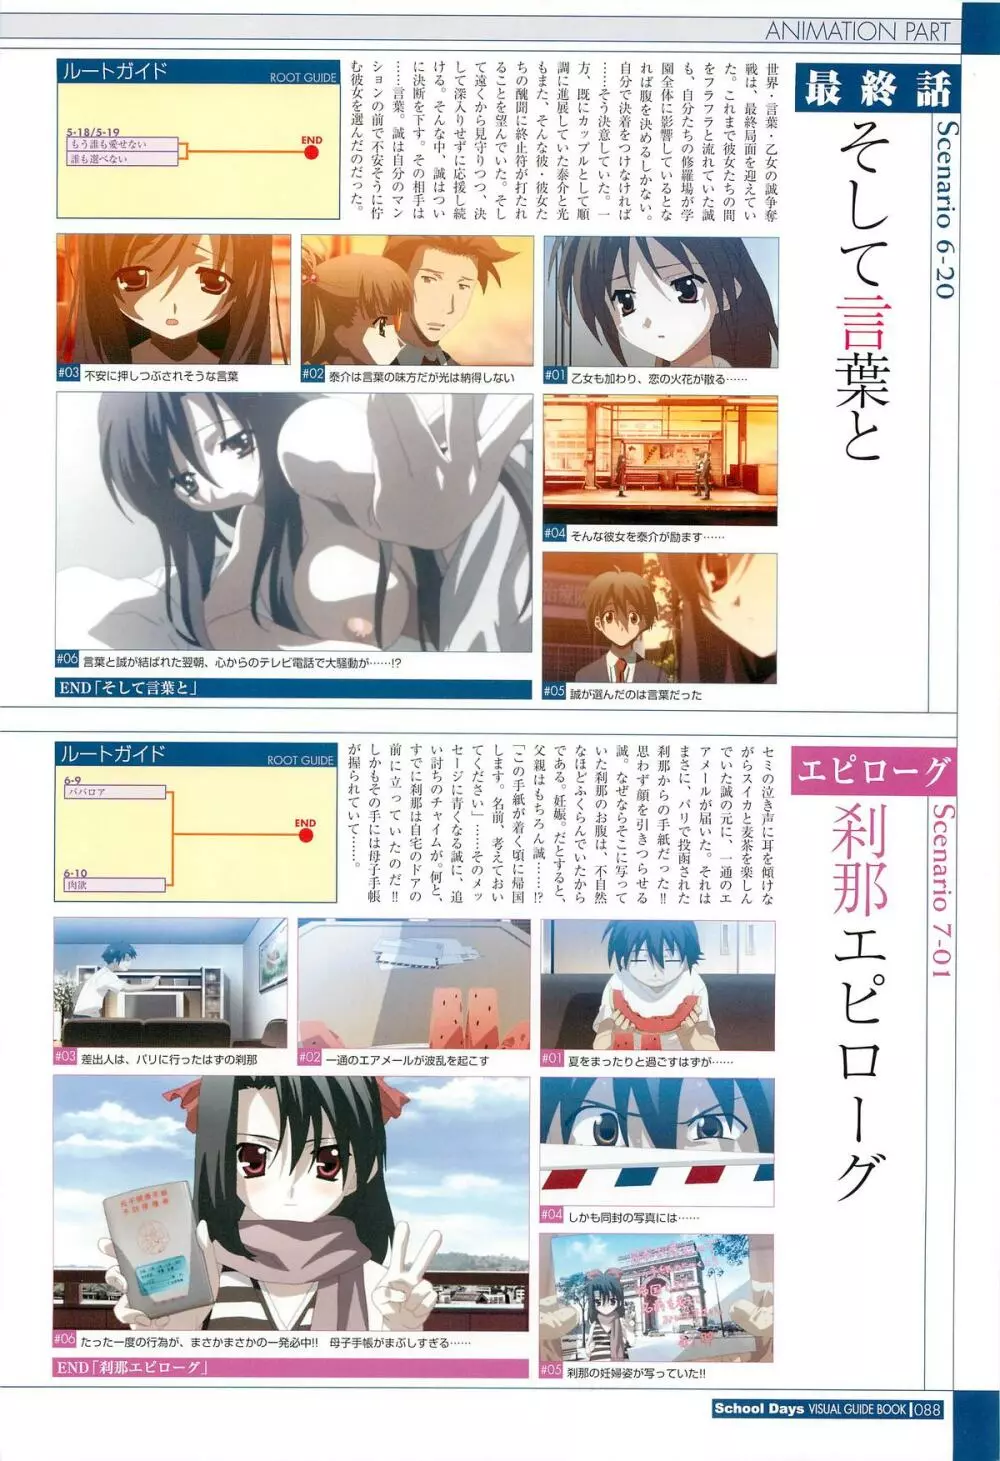 School Days ビジュアル・ガイドブック 90ページ